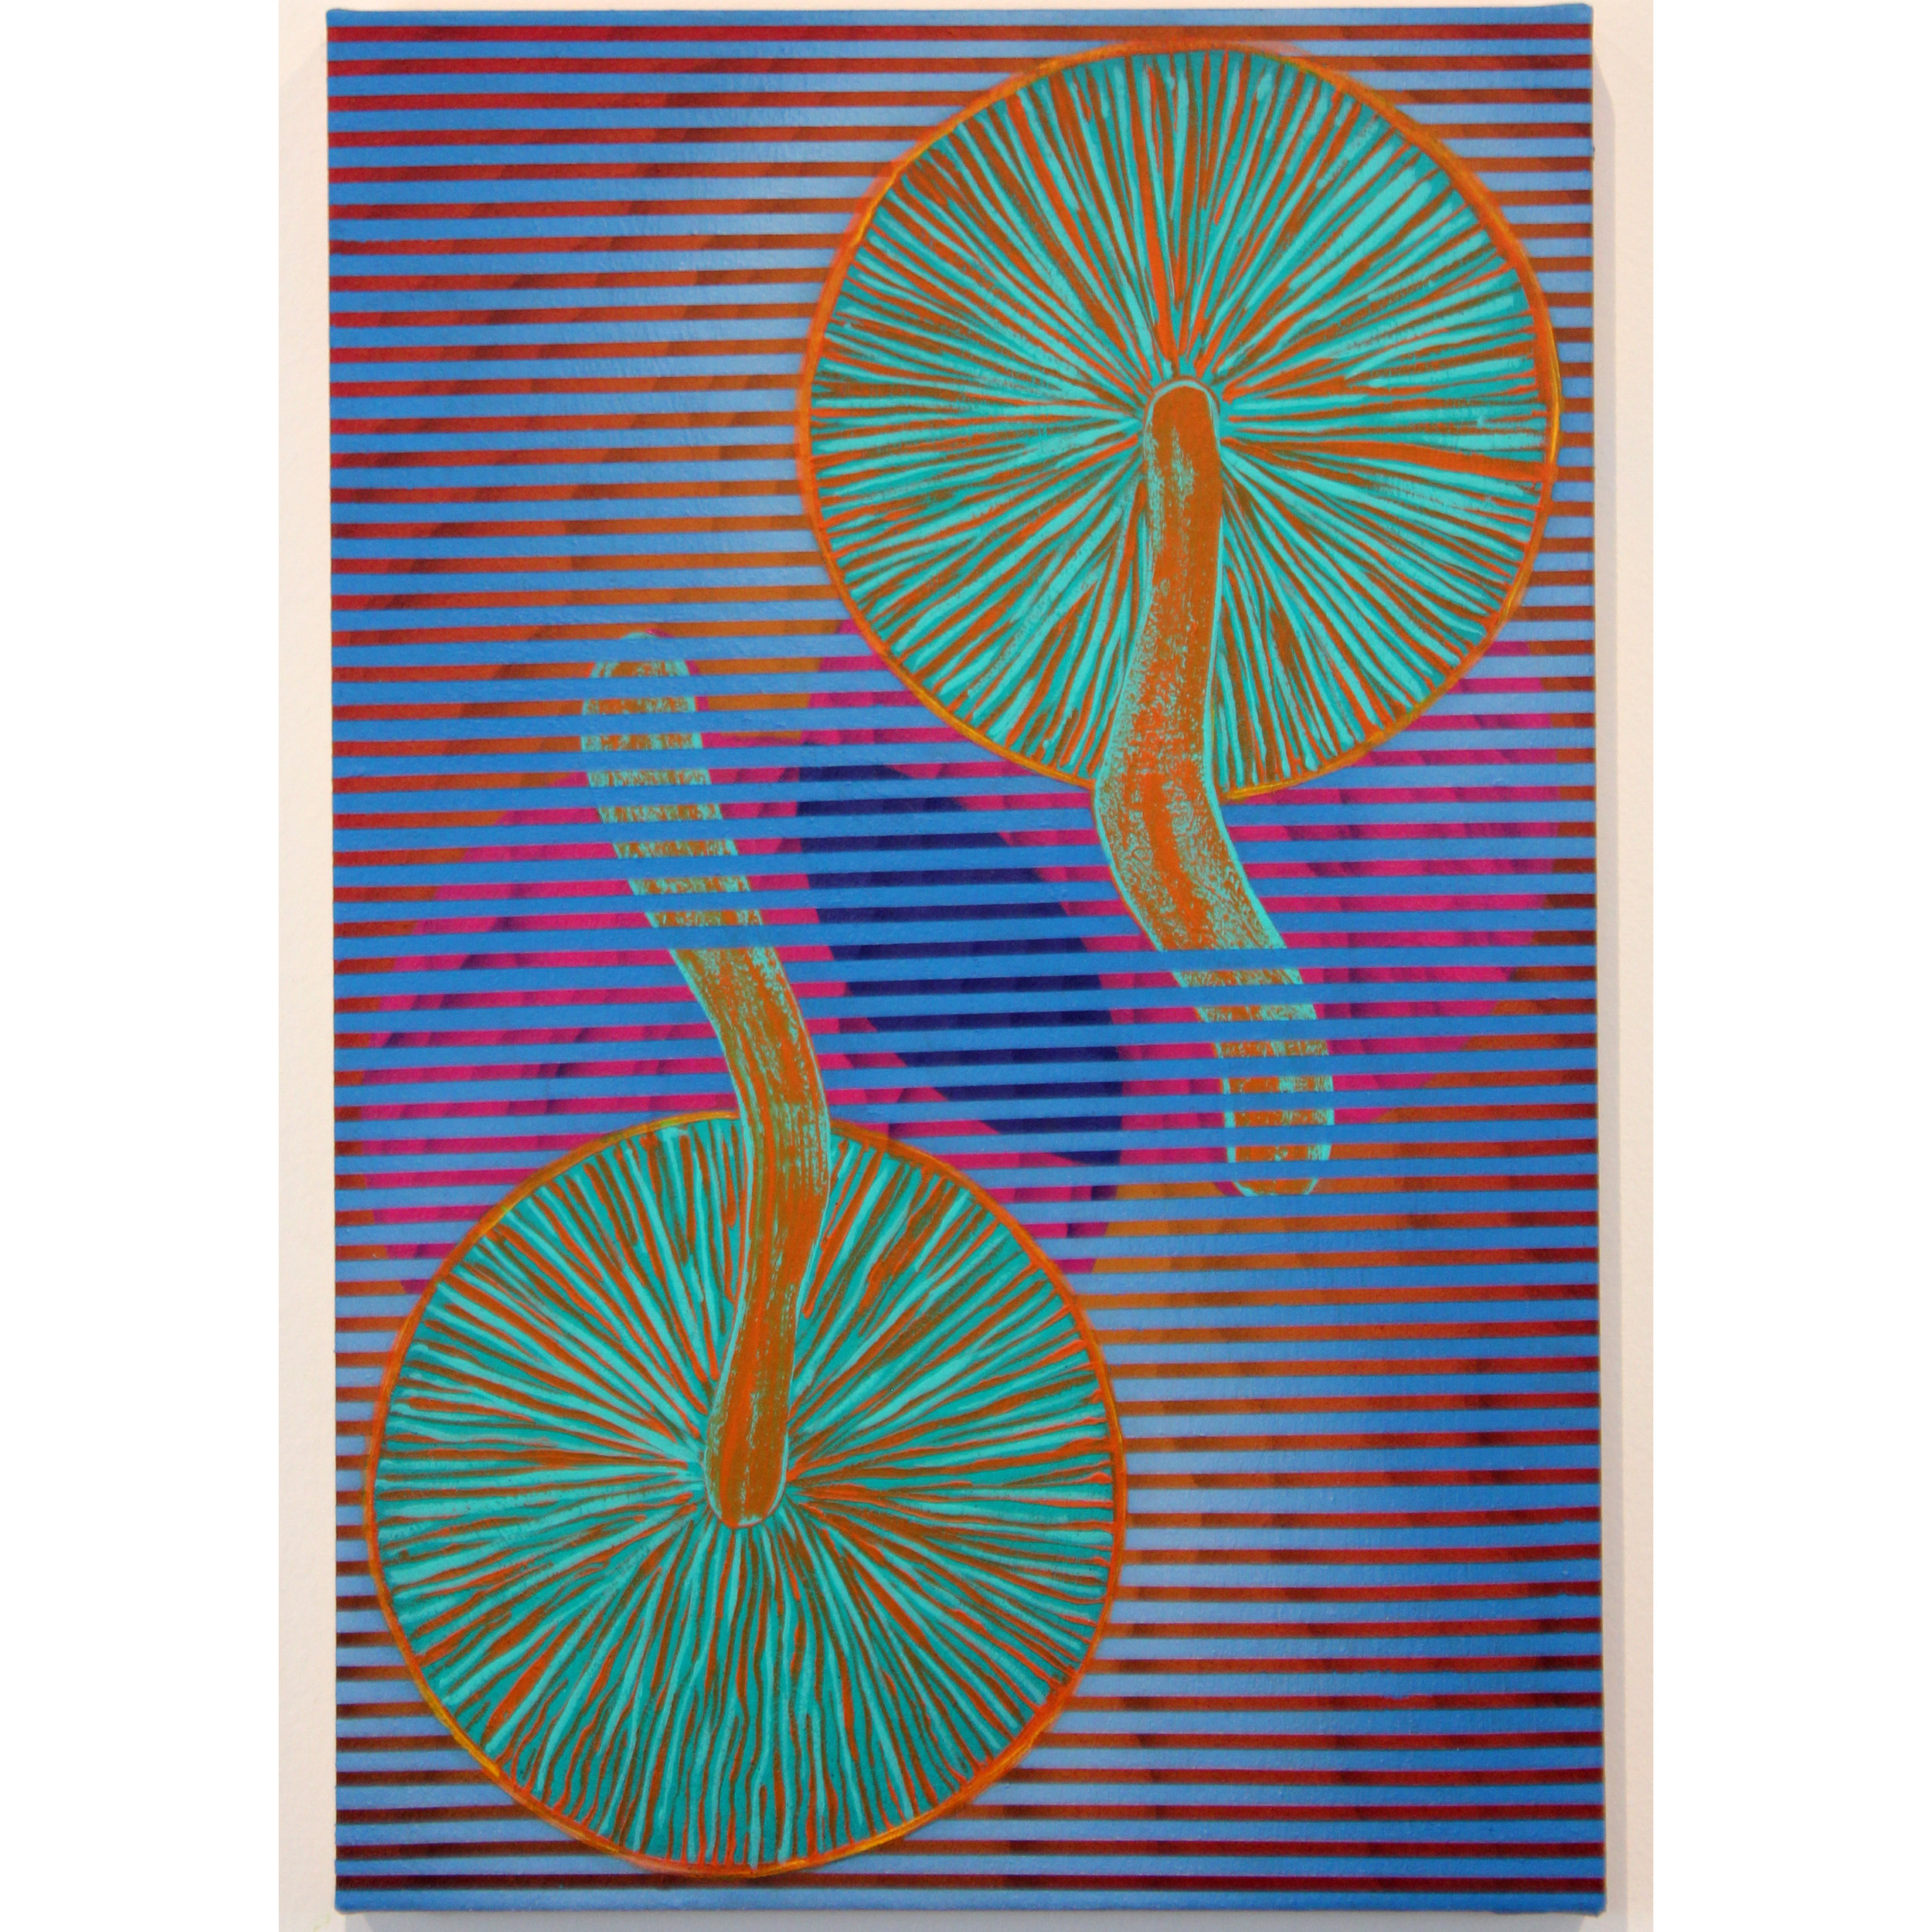   Mushrooms , 2019, acrylic on canvas, 15 x 10 inches. 